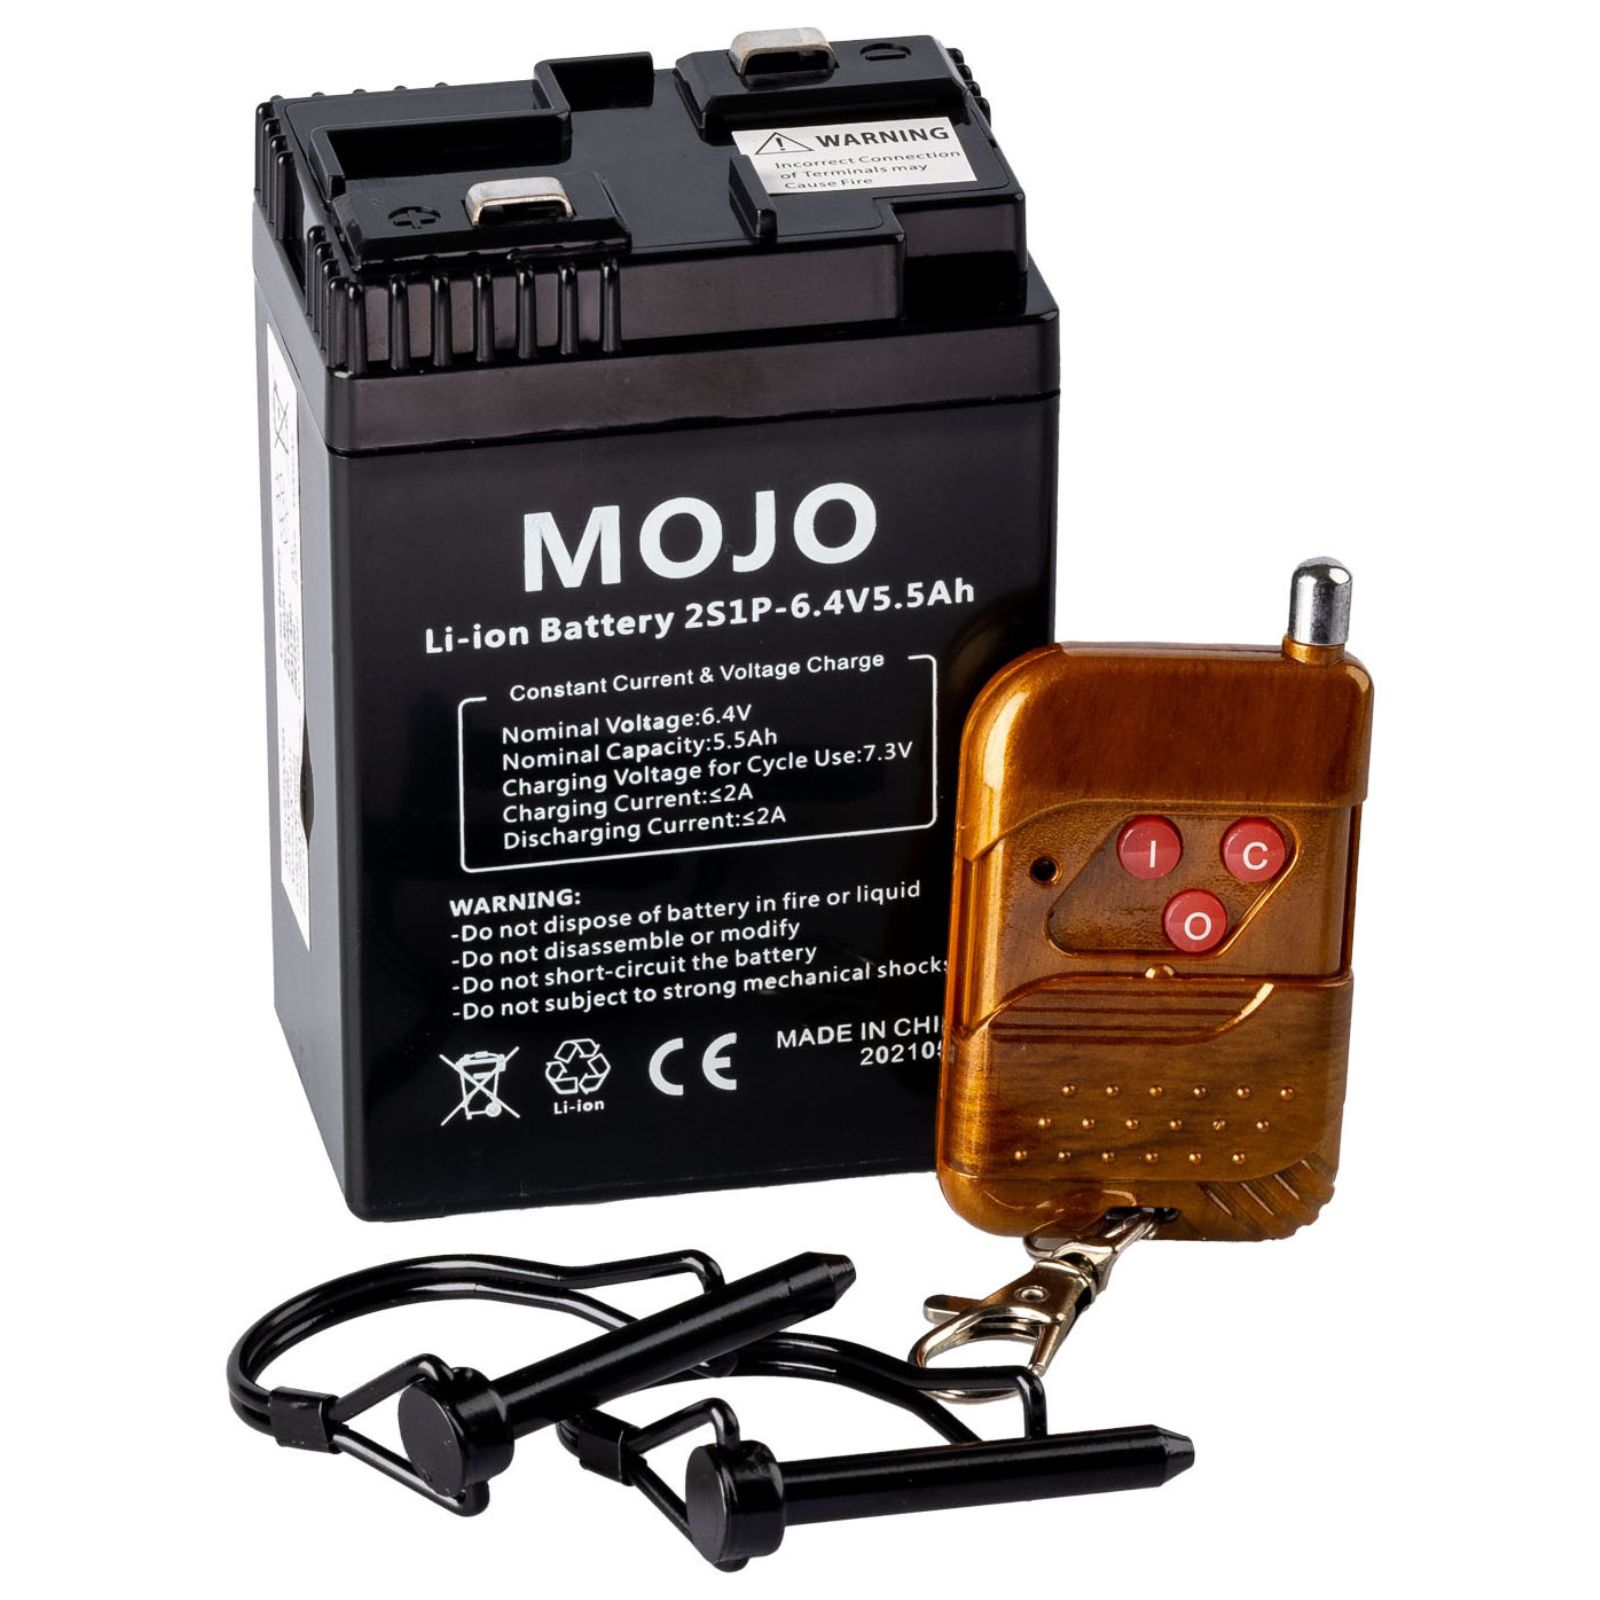 Mojo Es King Mallard With Lio-Ion Battery